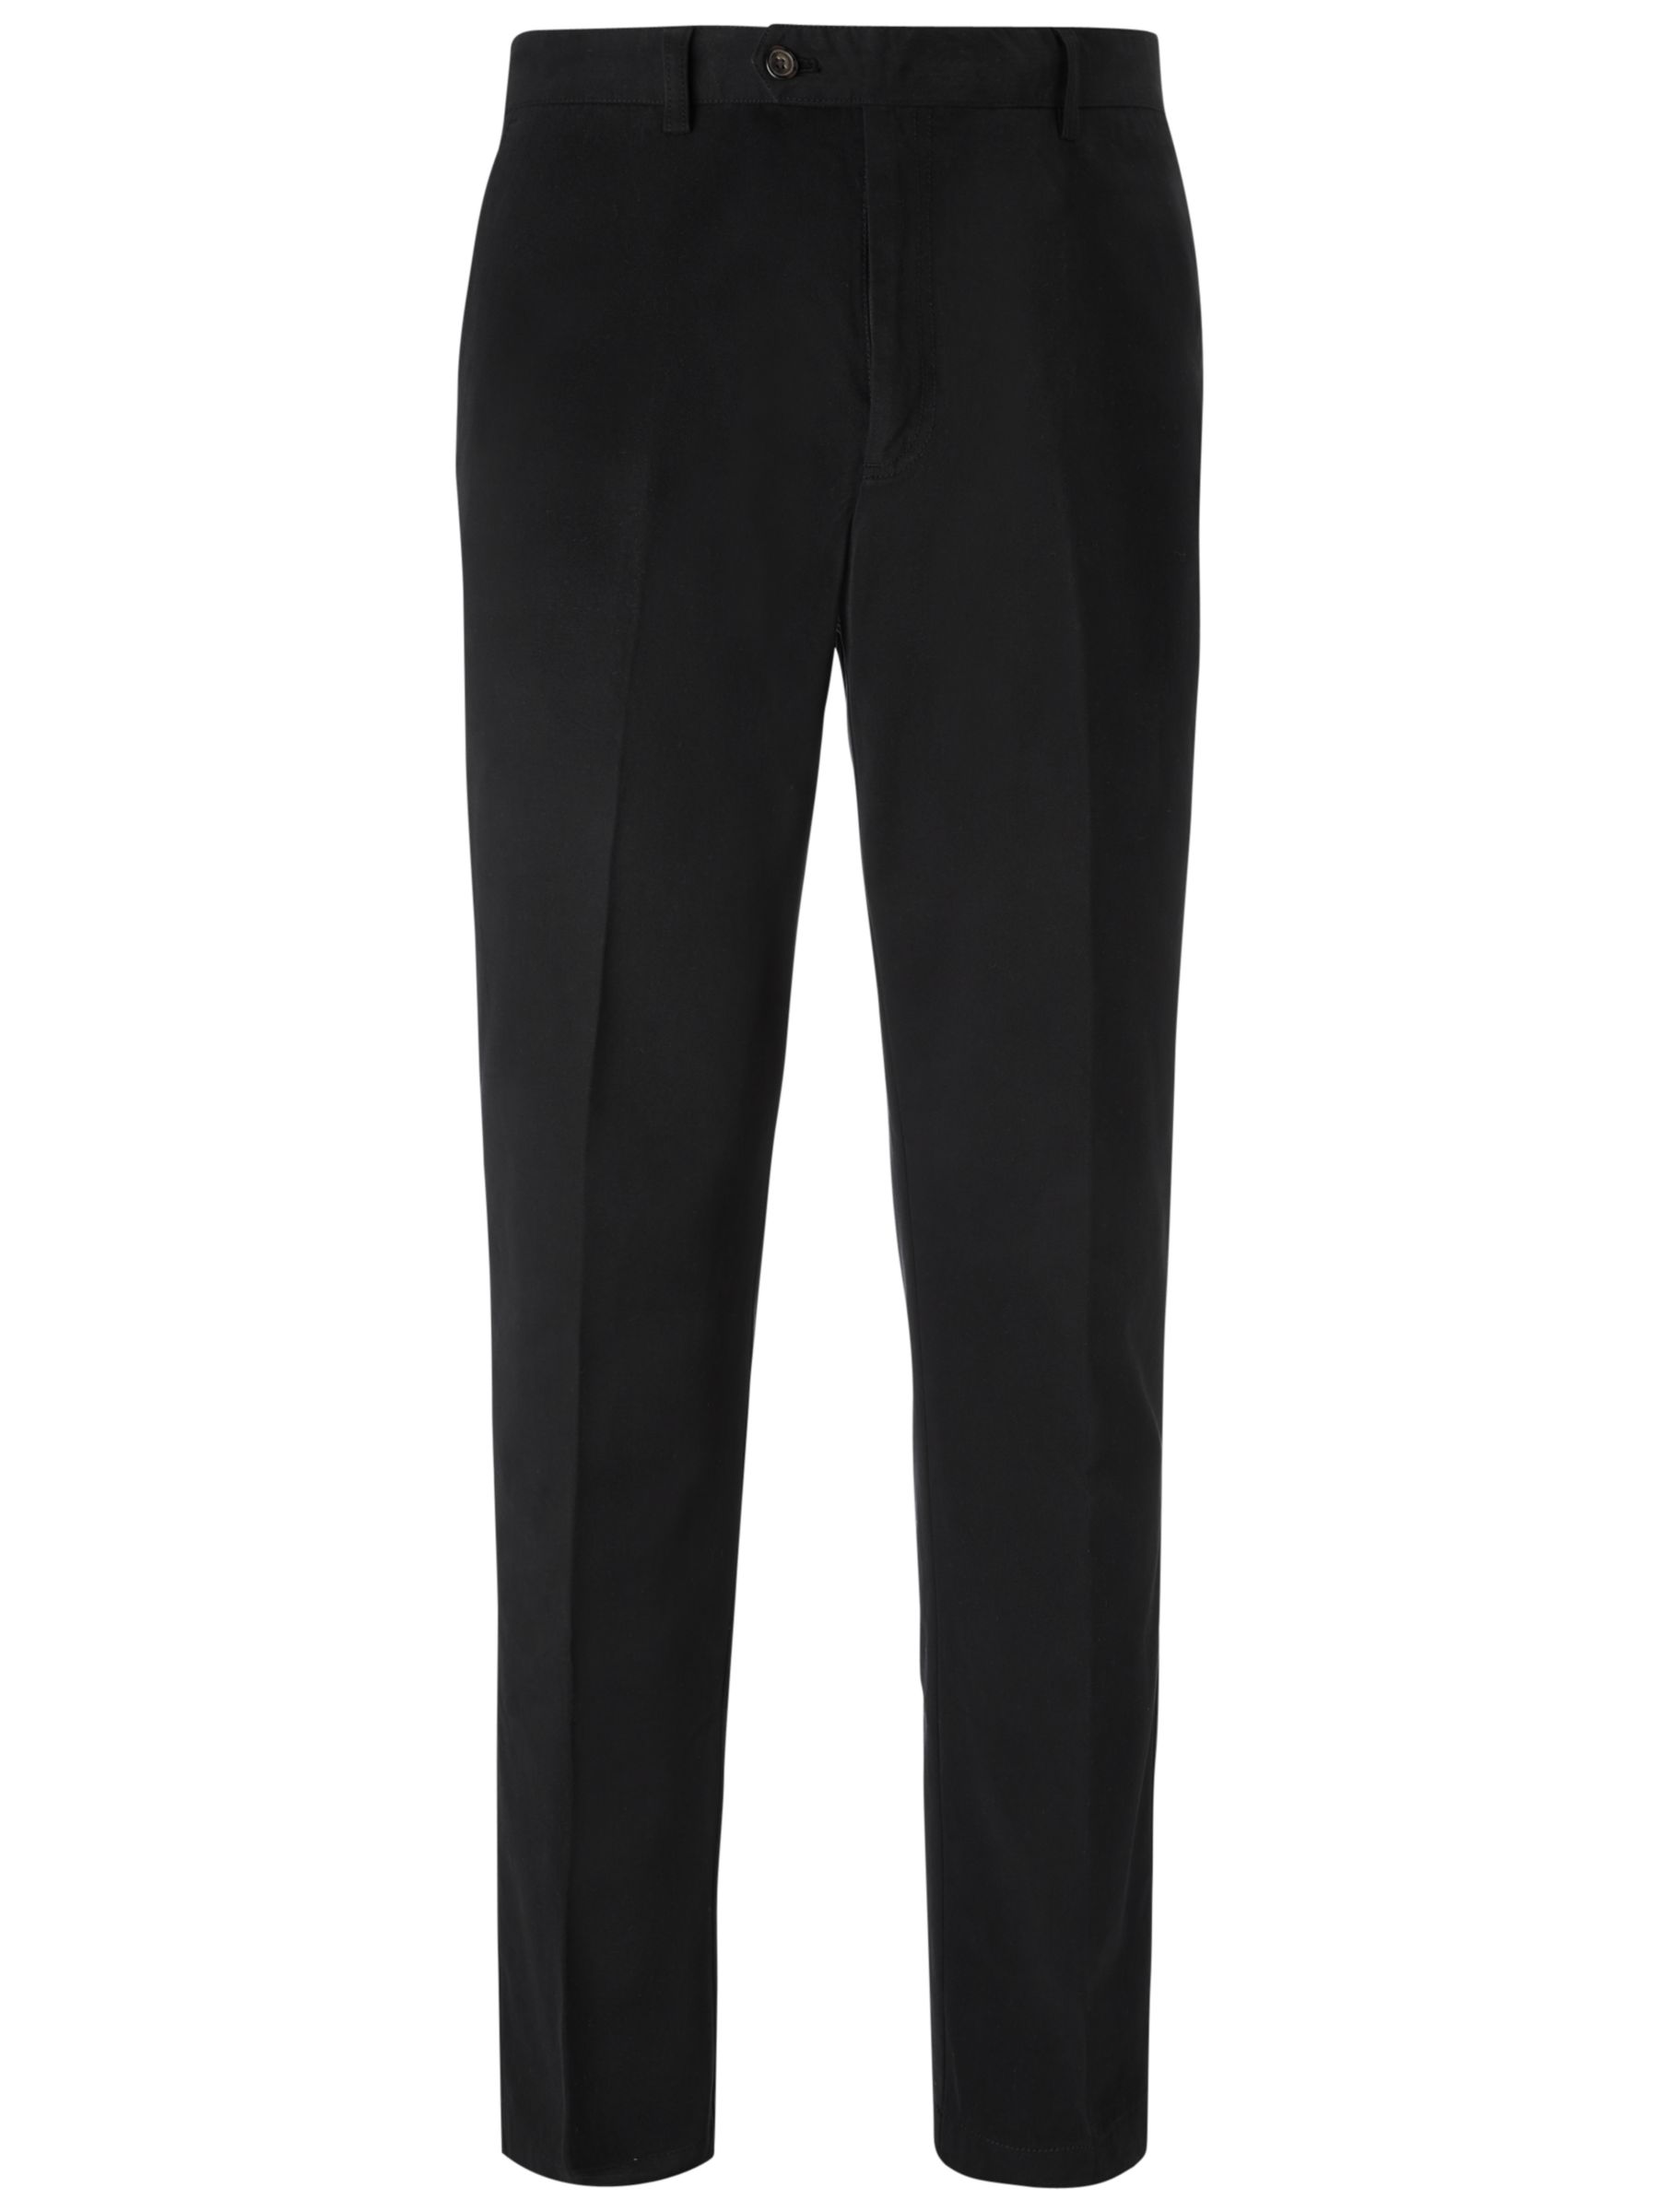 John Lewis & Partners Wrinkle Free Flat Front Trousers, Black